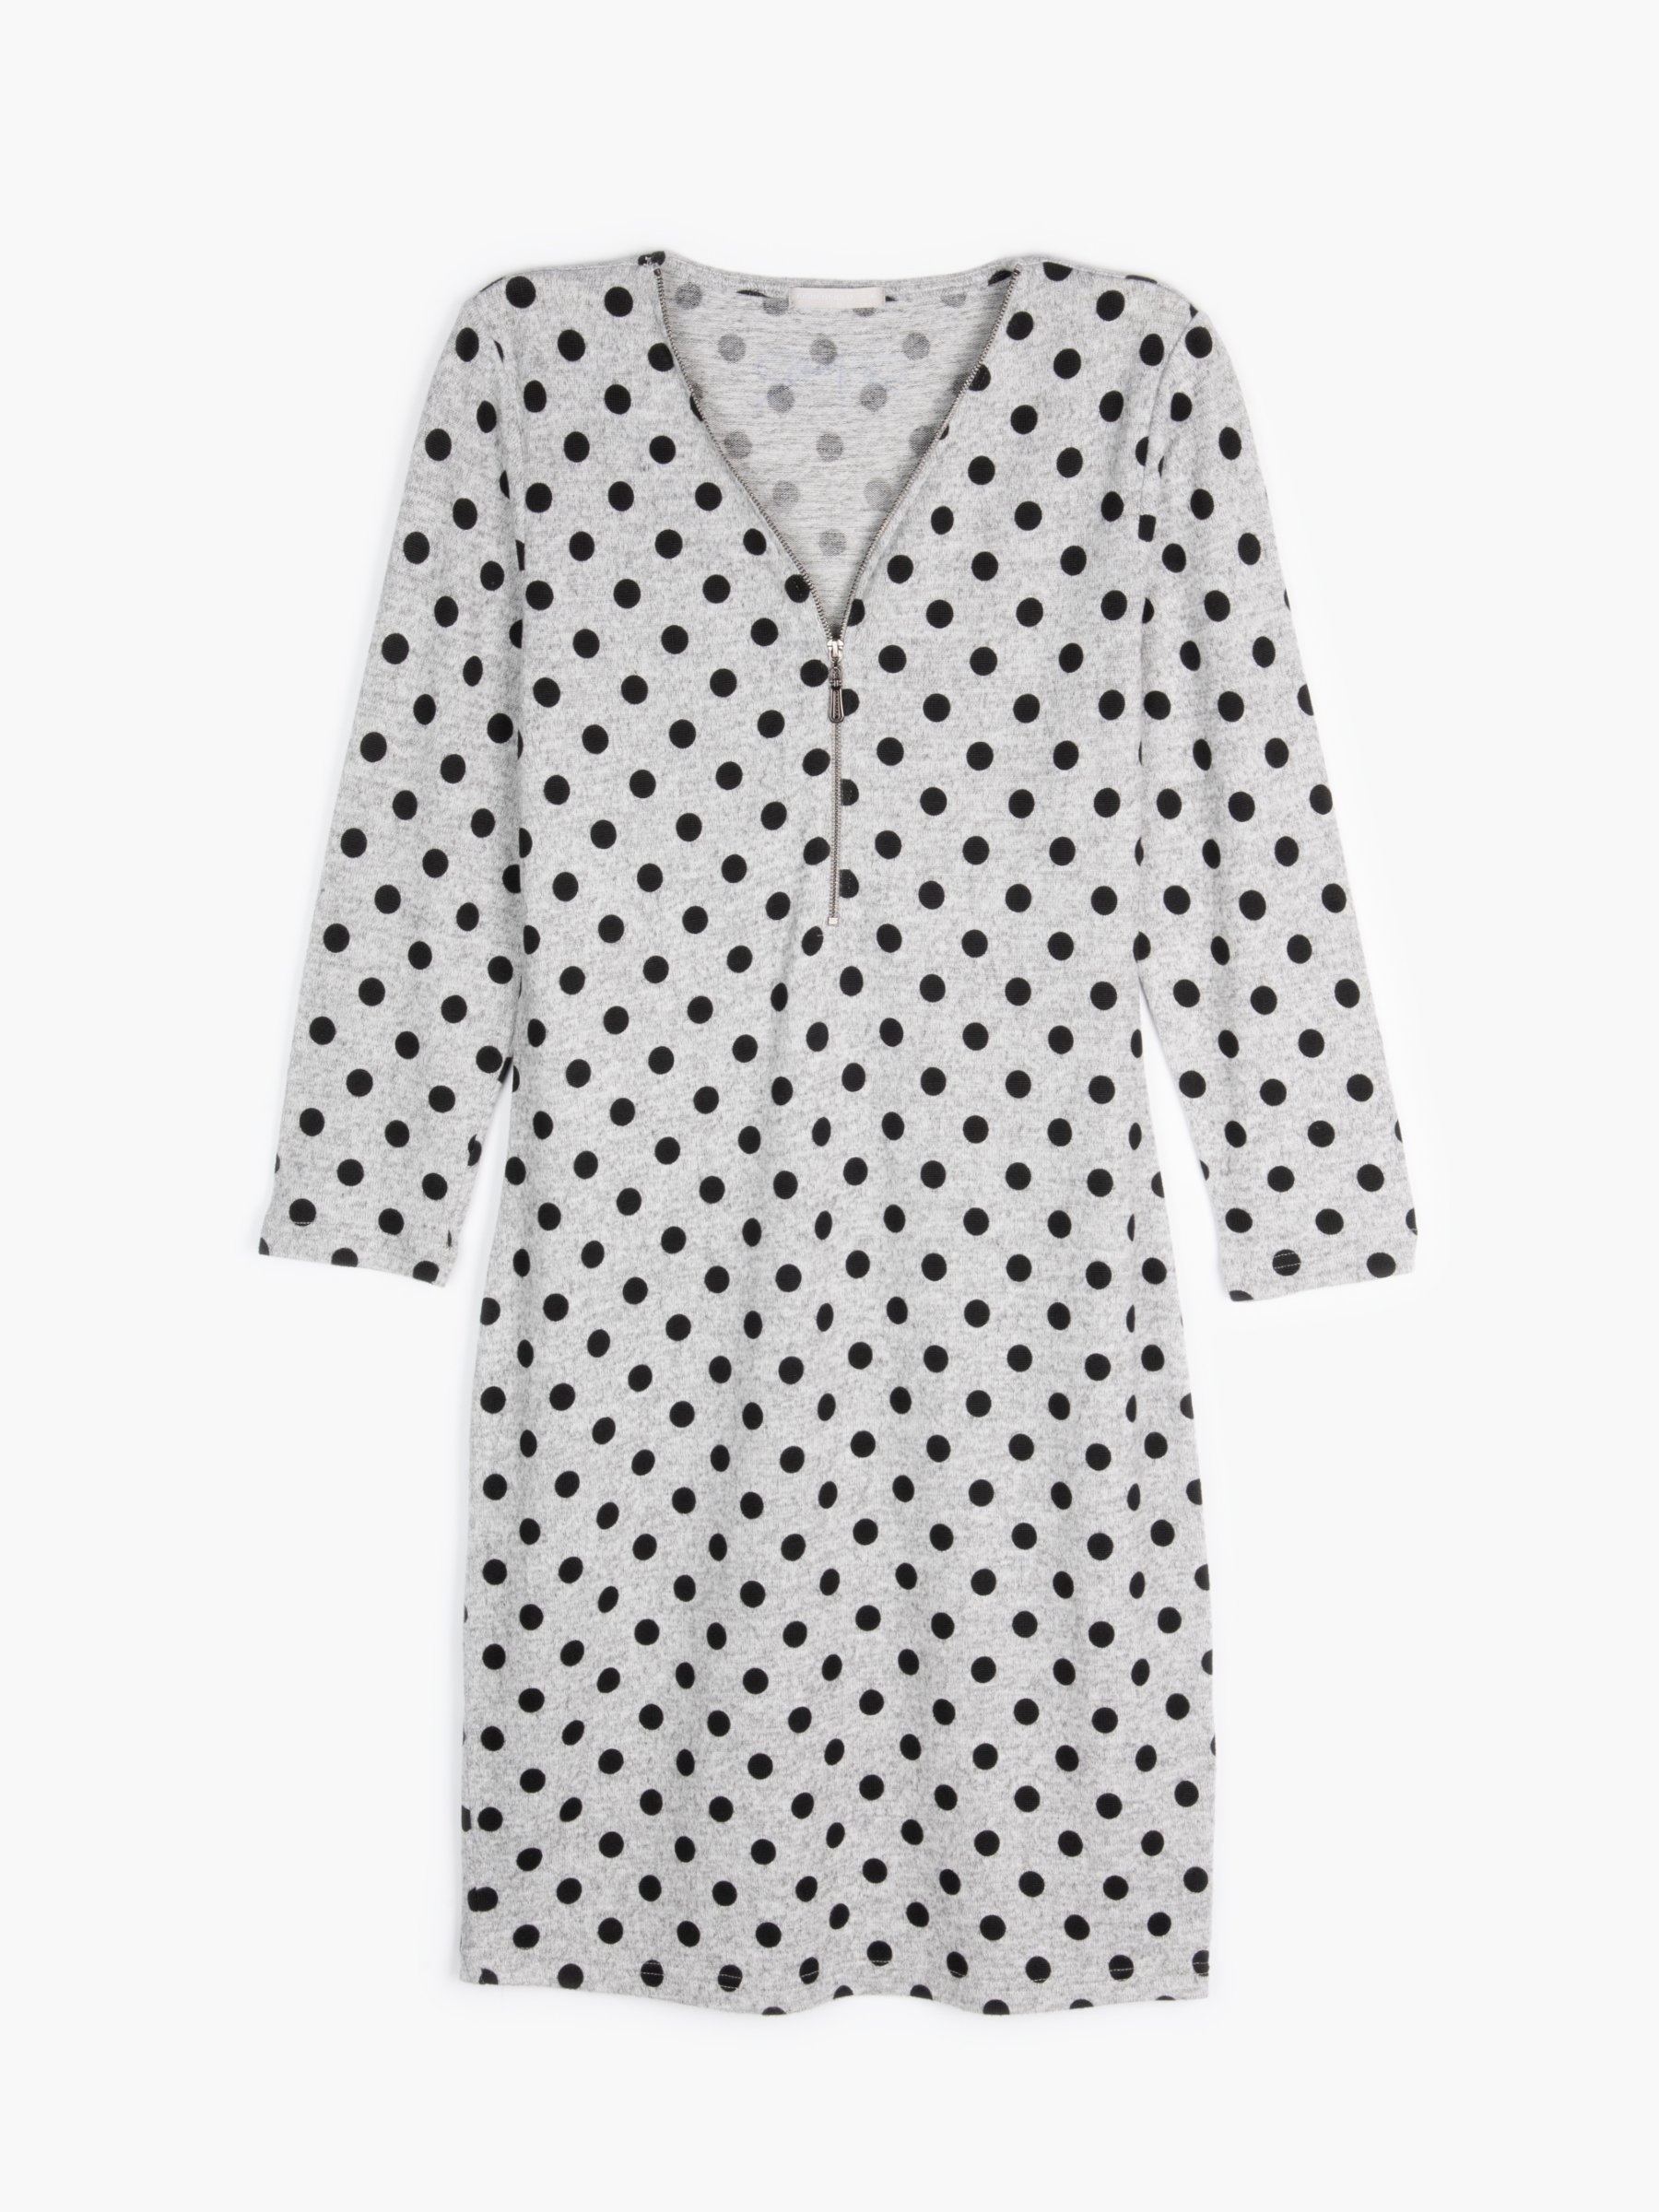 Polka dot print dress with zipper | GATE